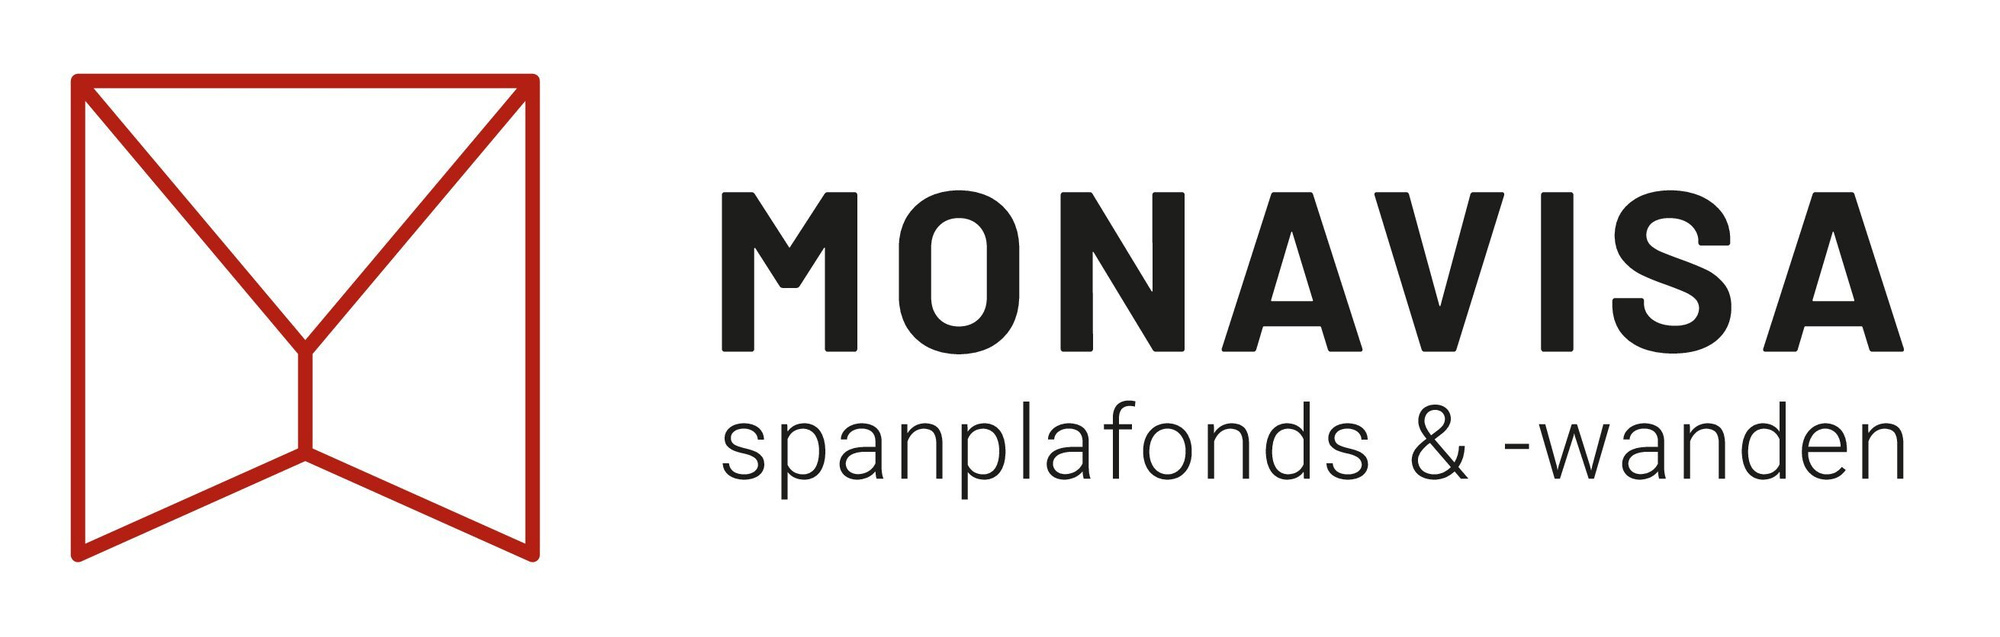 Monavisa